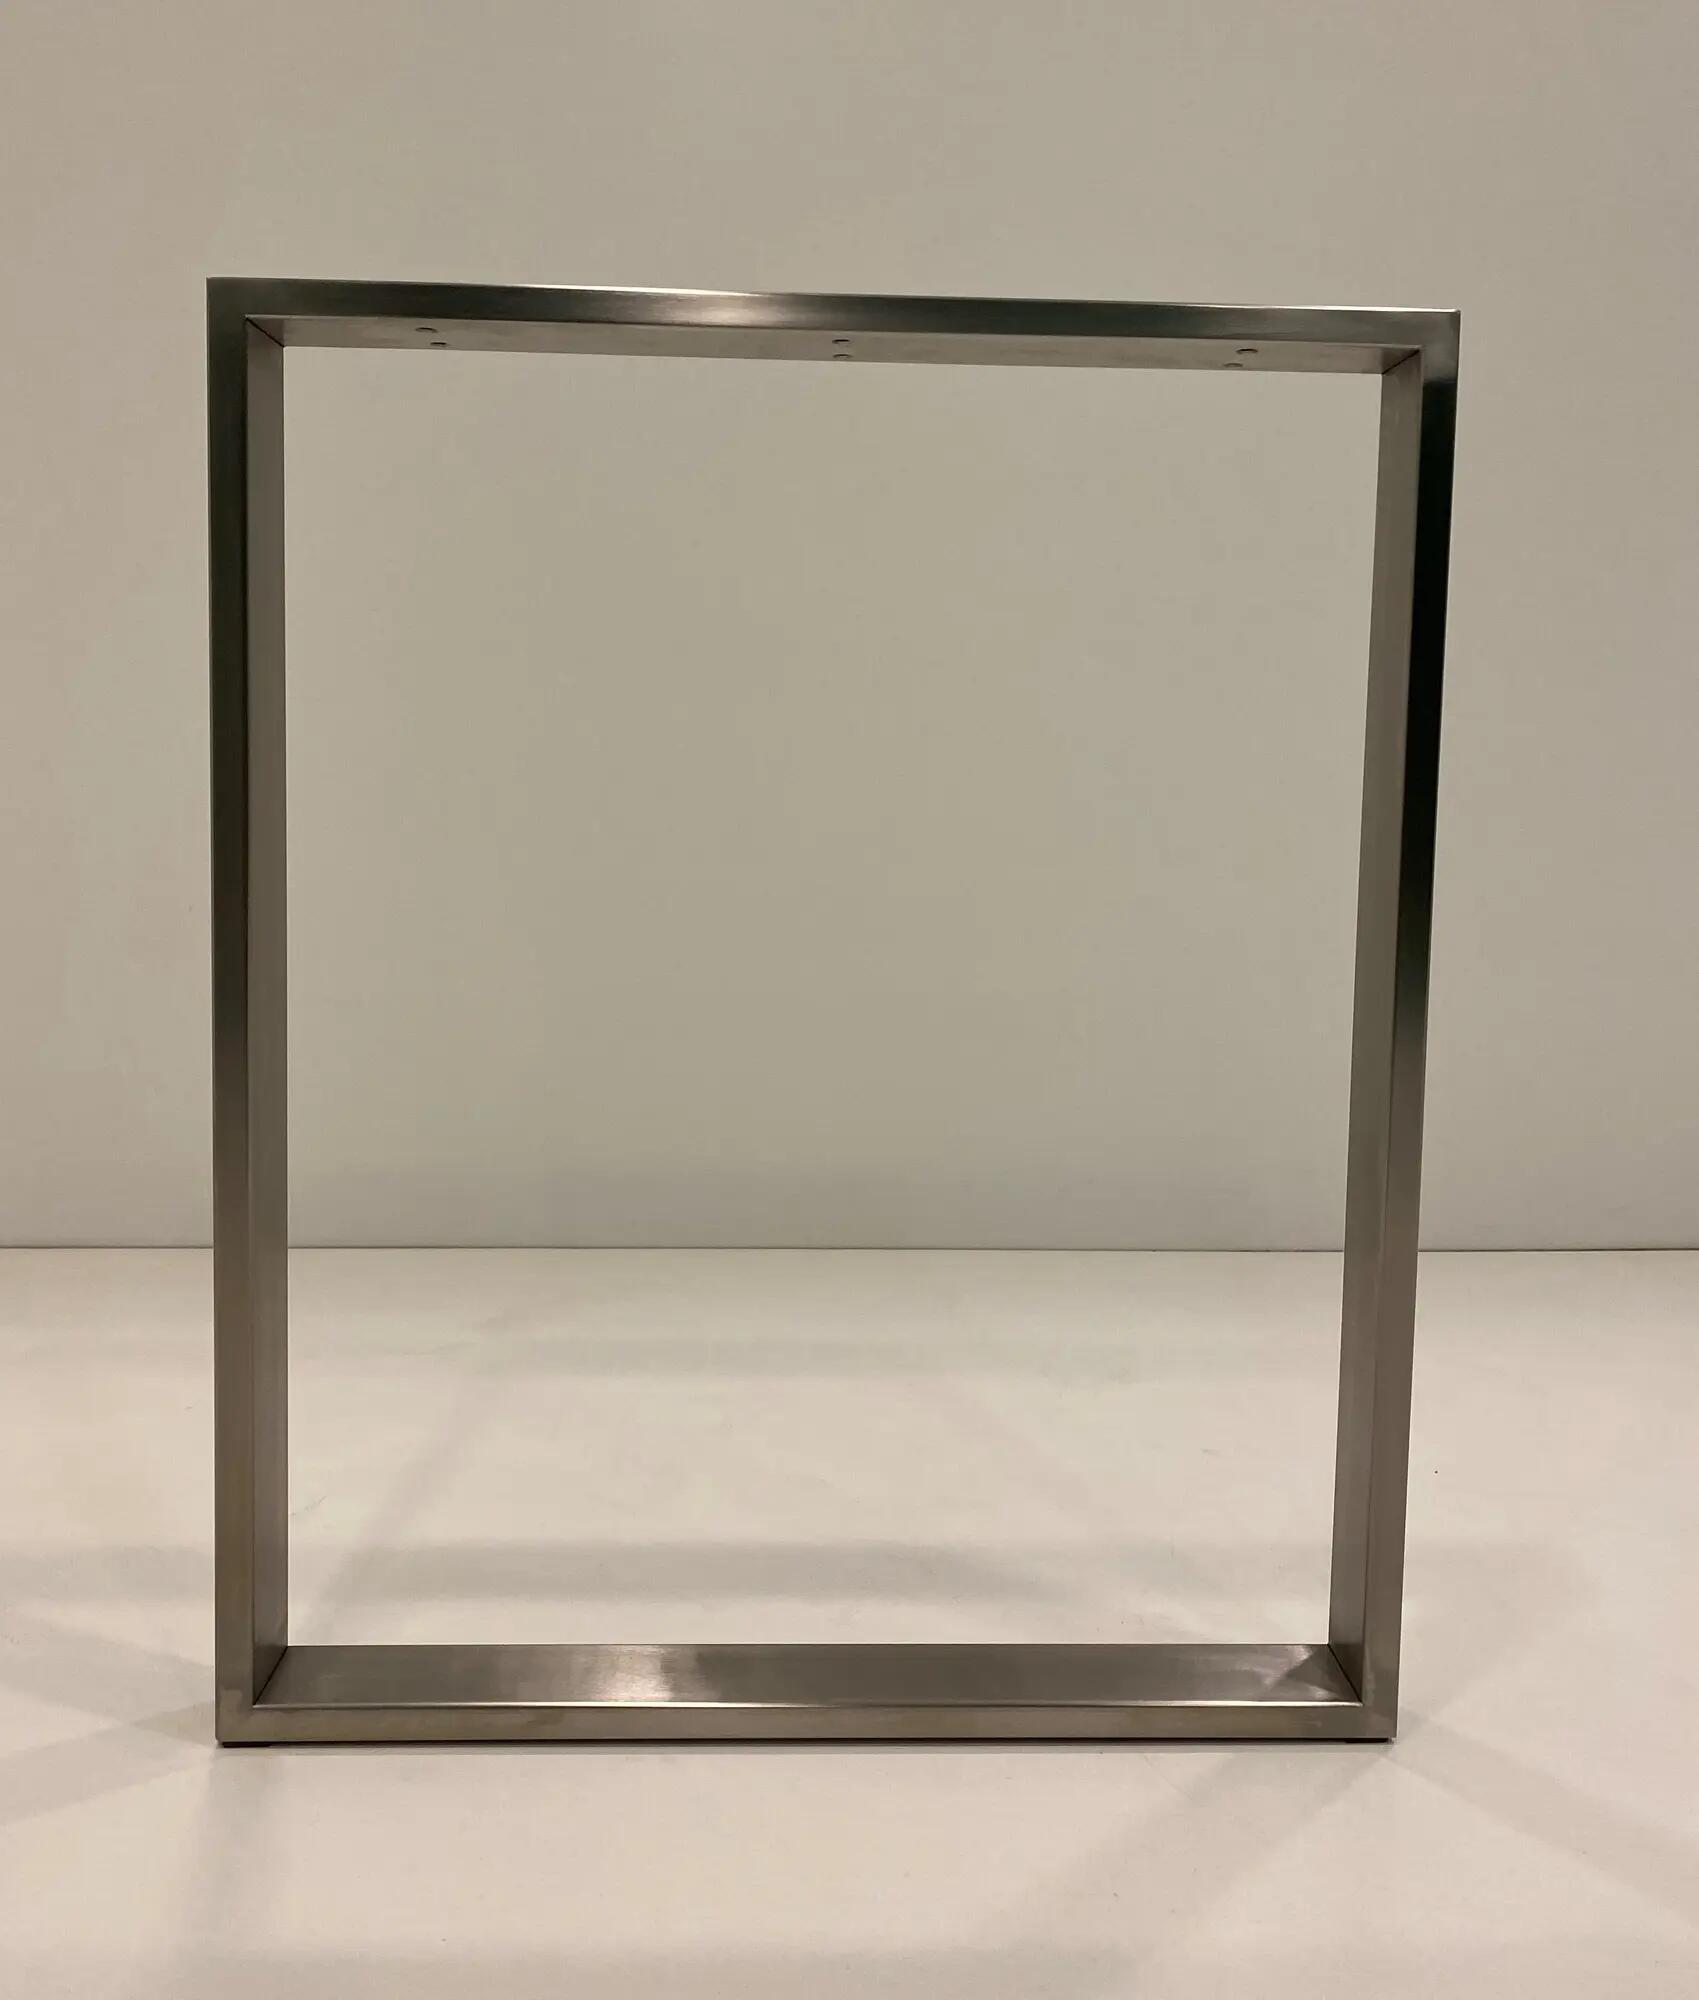 Pata fija rectangular de acero inoxidable brillante para mesa 60 x 72 cm